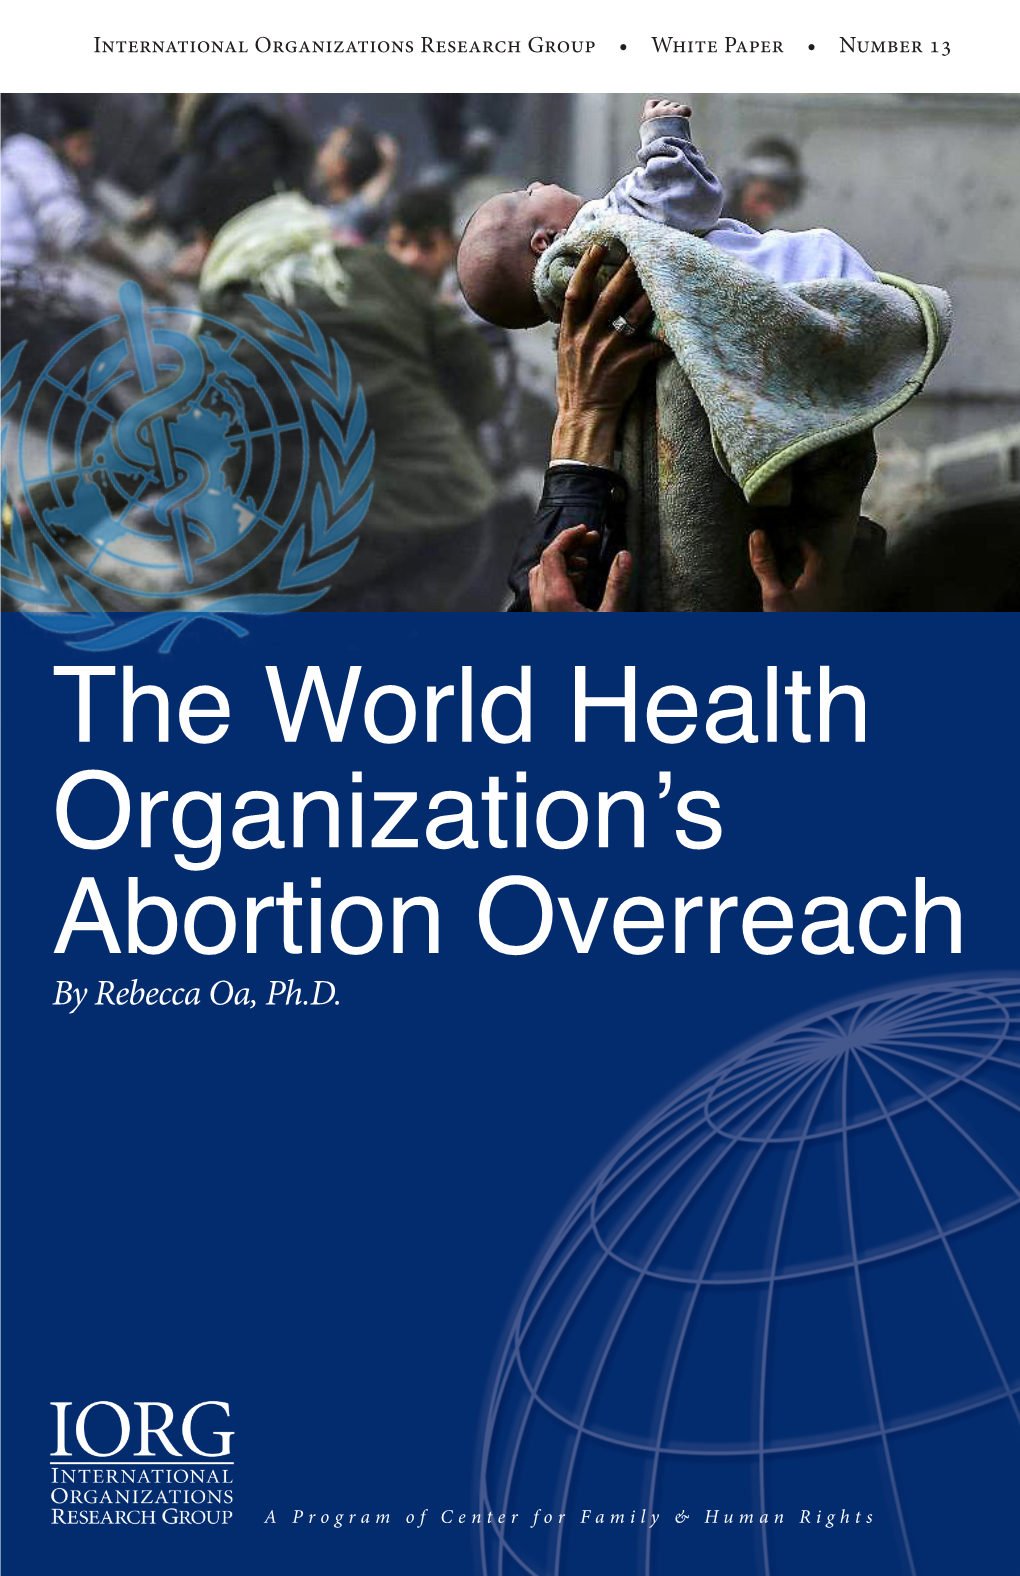 The World Health Organization's Abortion Overreach